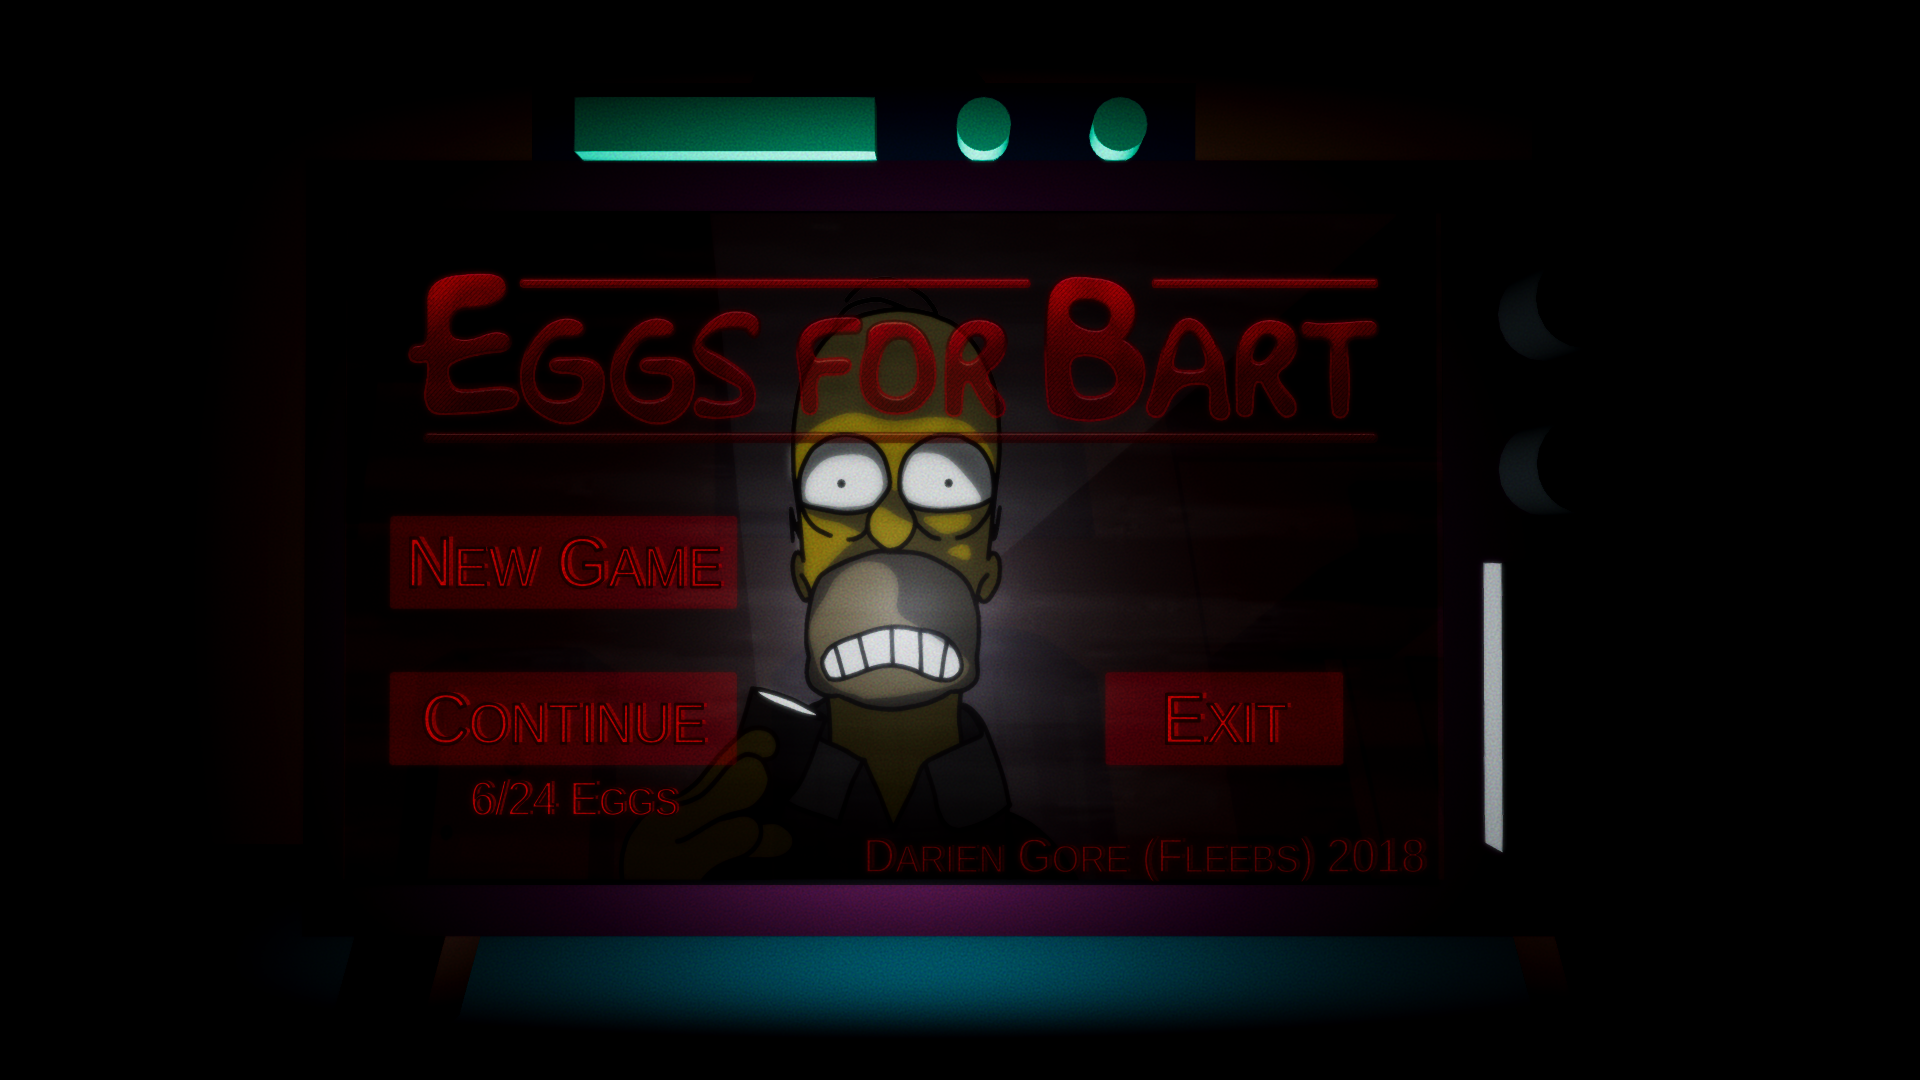 Eggs For Bart By Fleebs - jugar roblox en mac y pc youtube